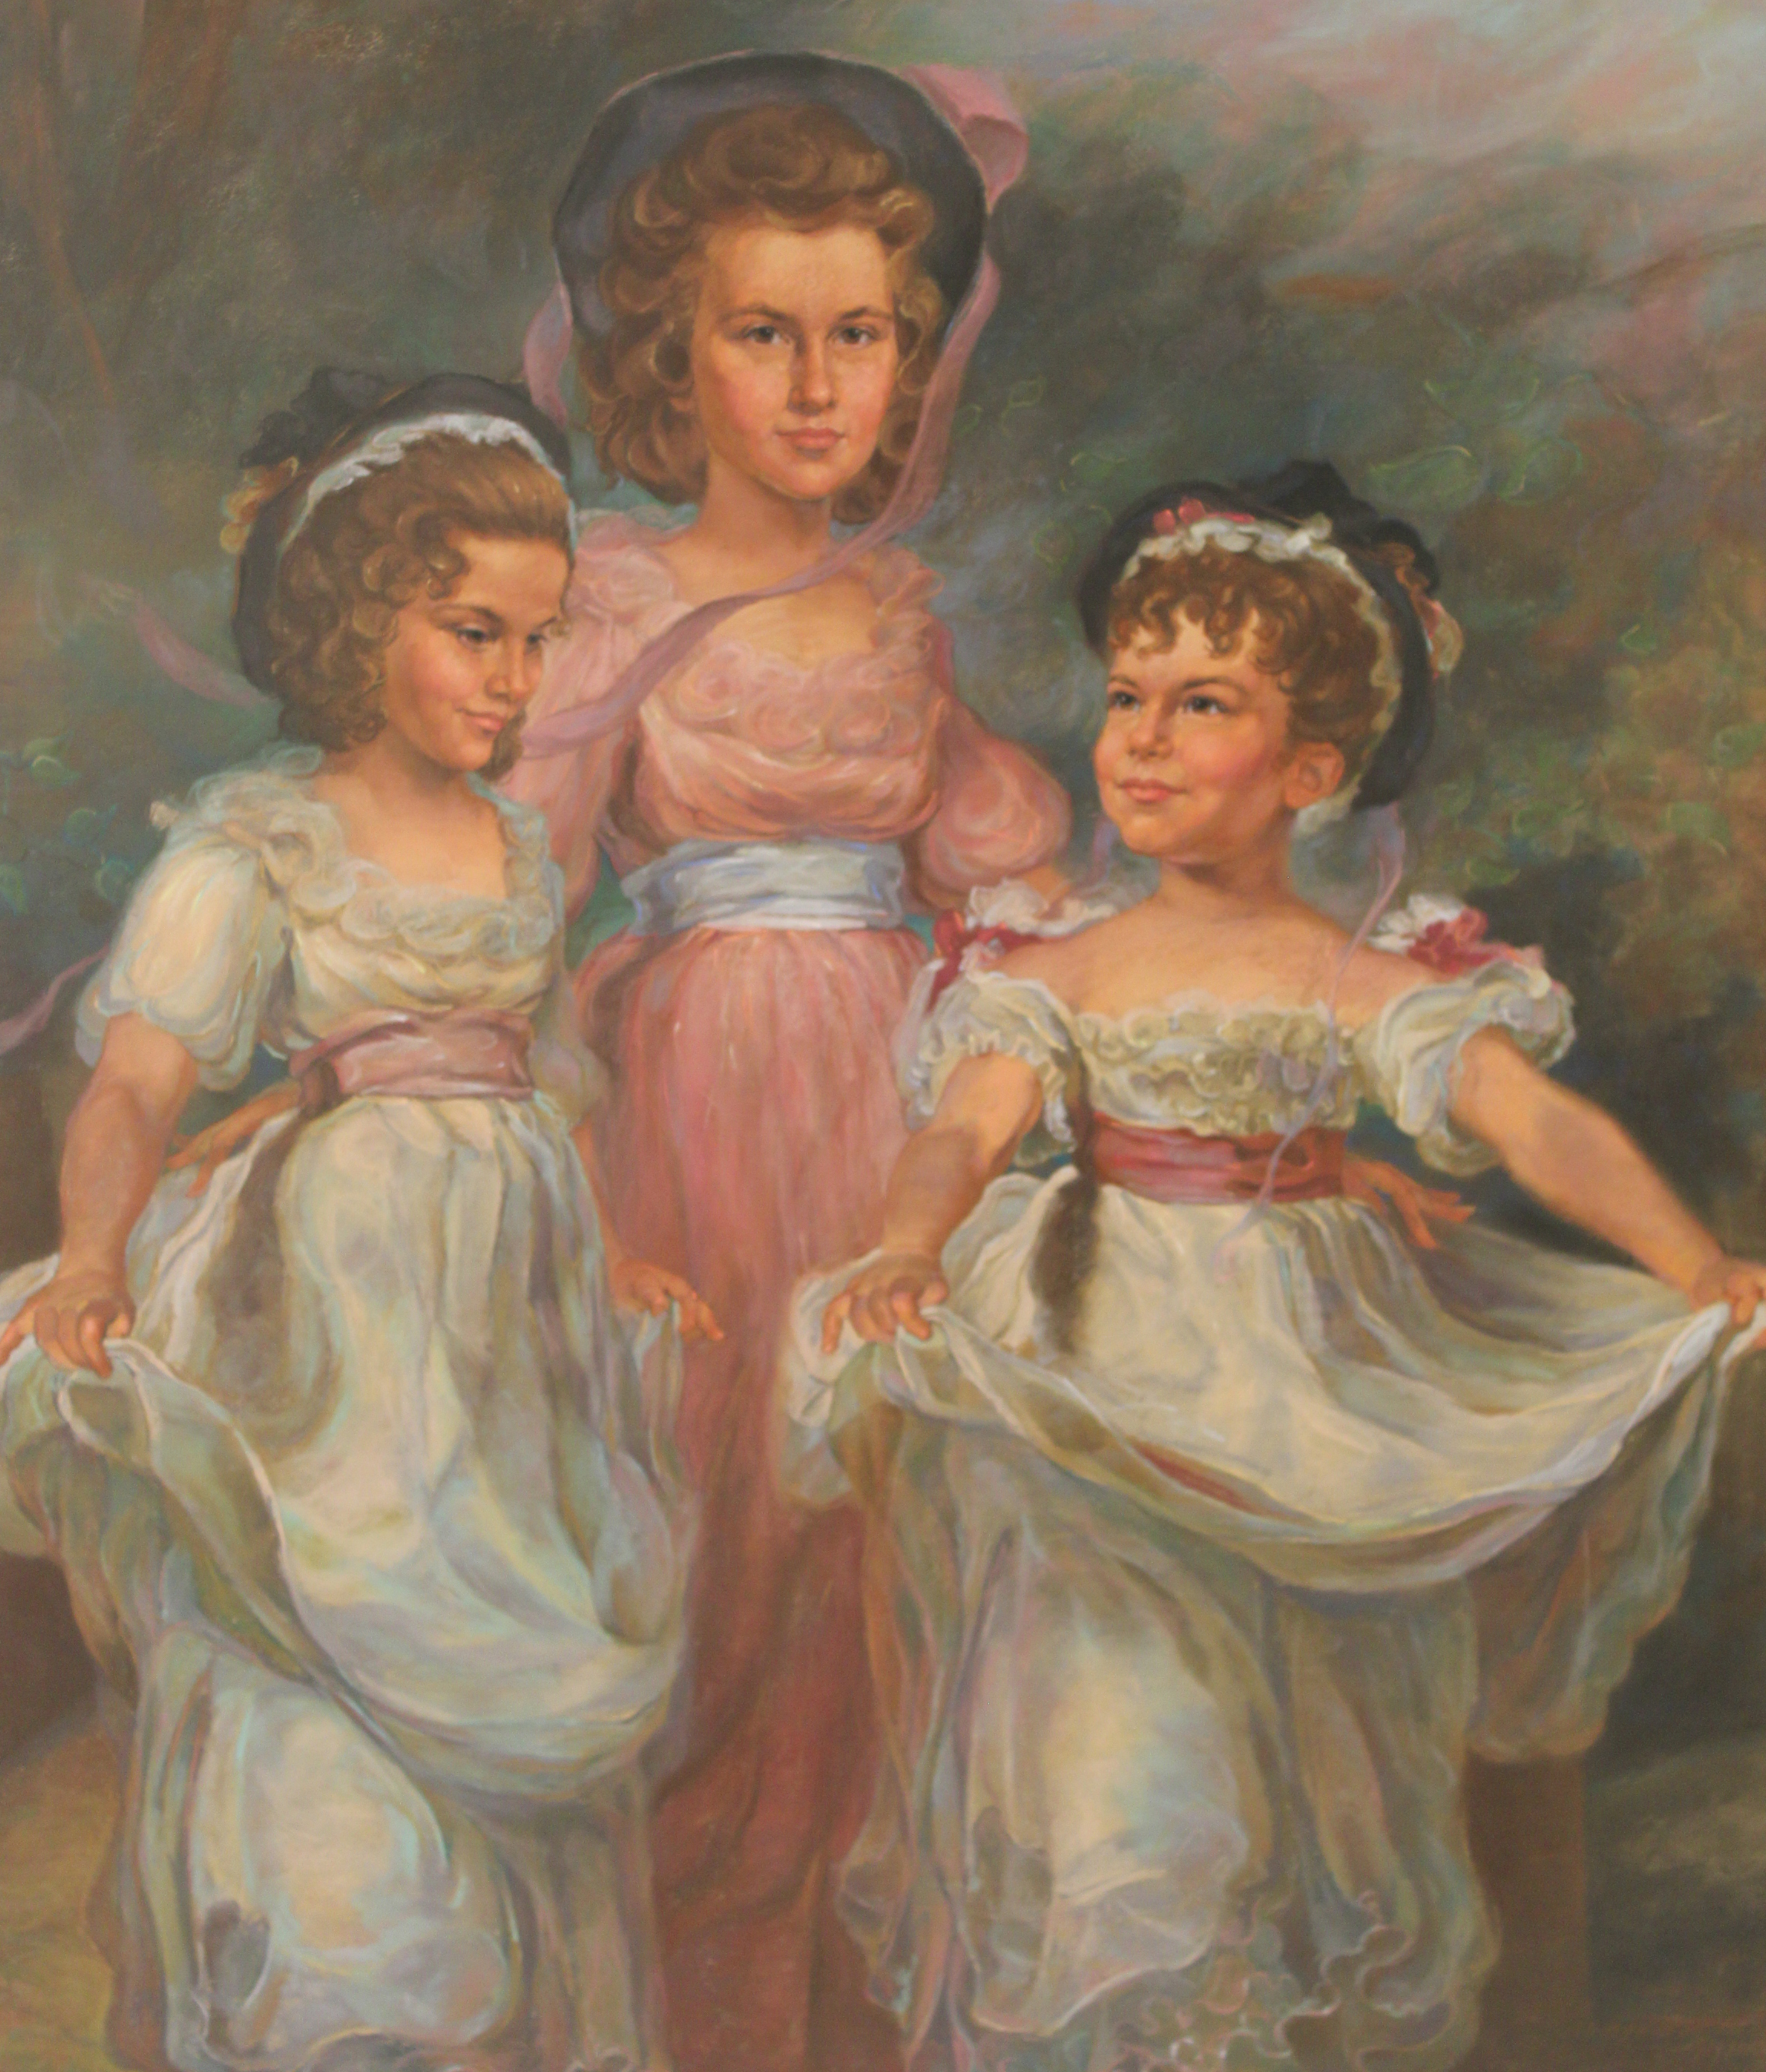 THREE SISTERS Romantic artwork